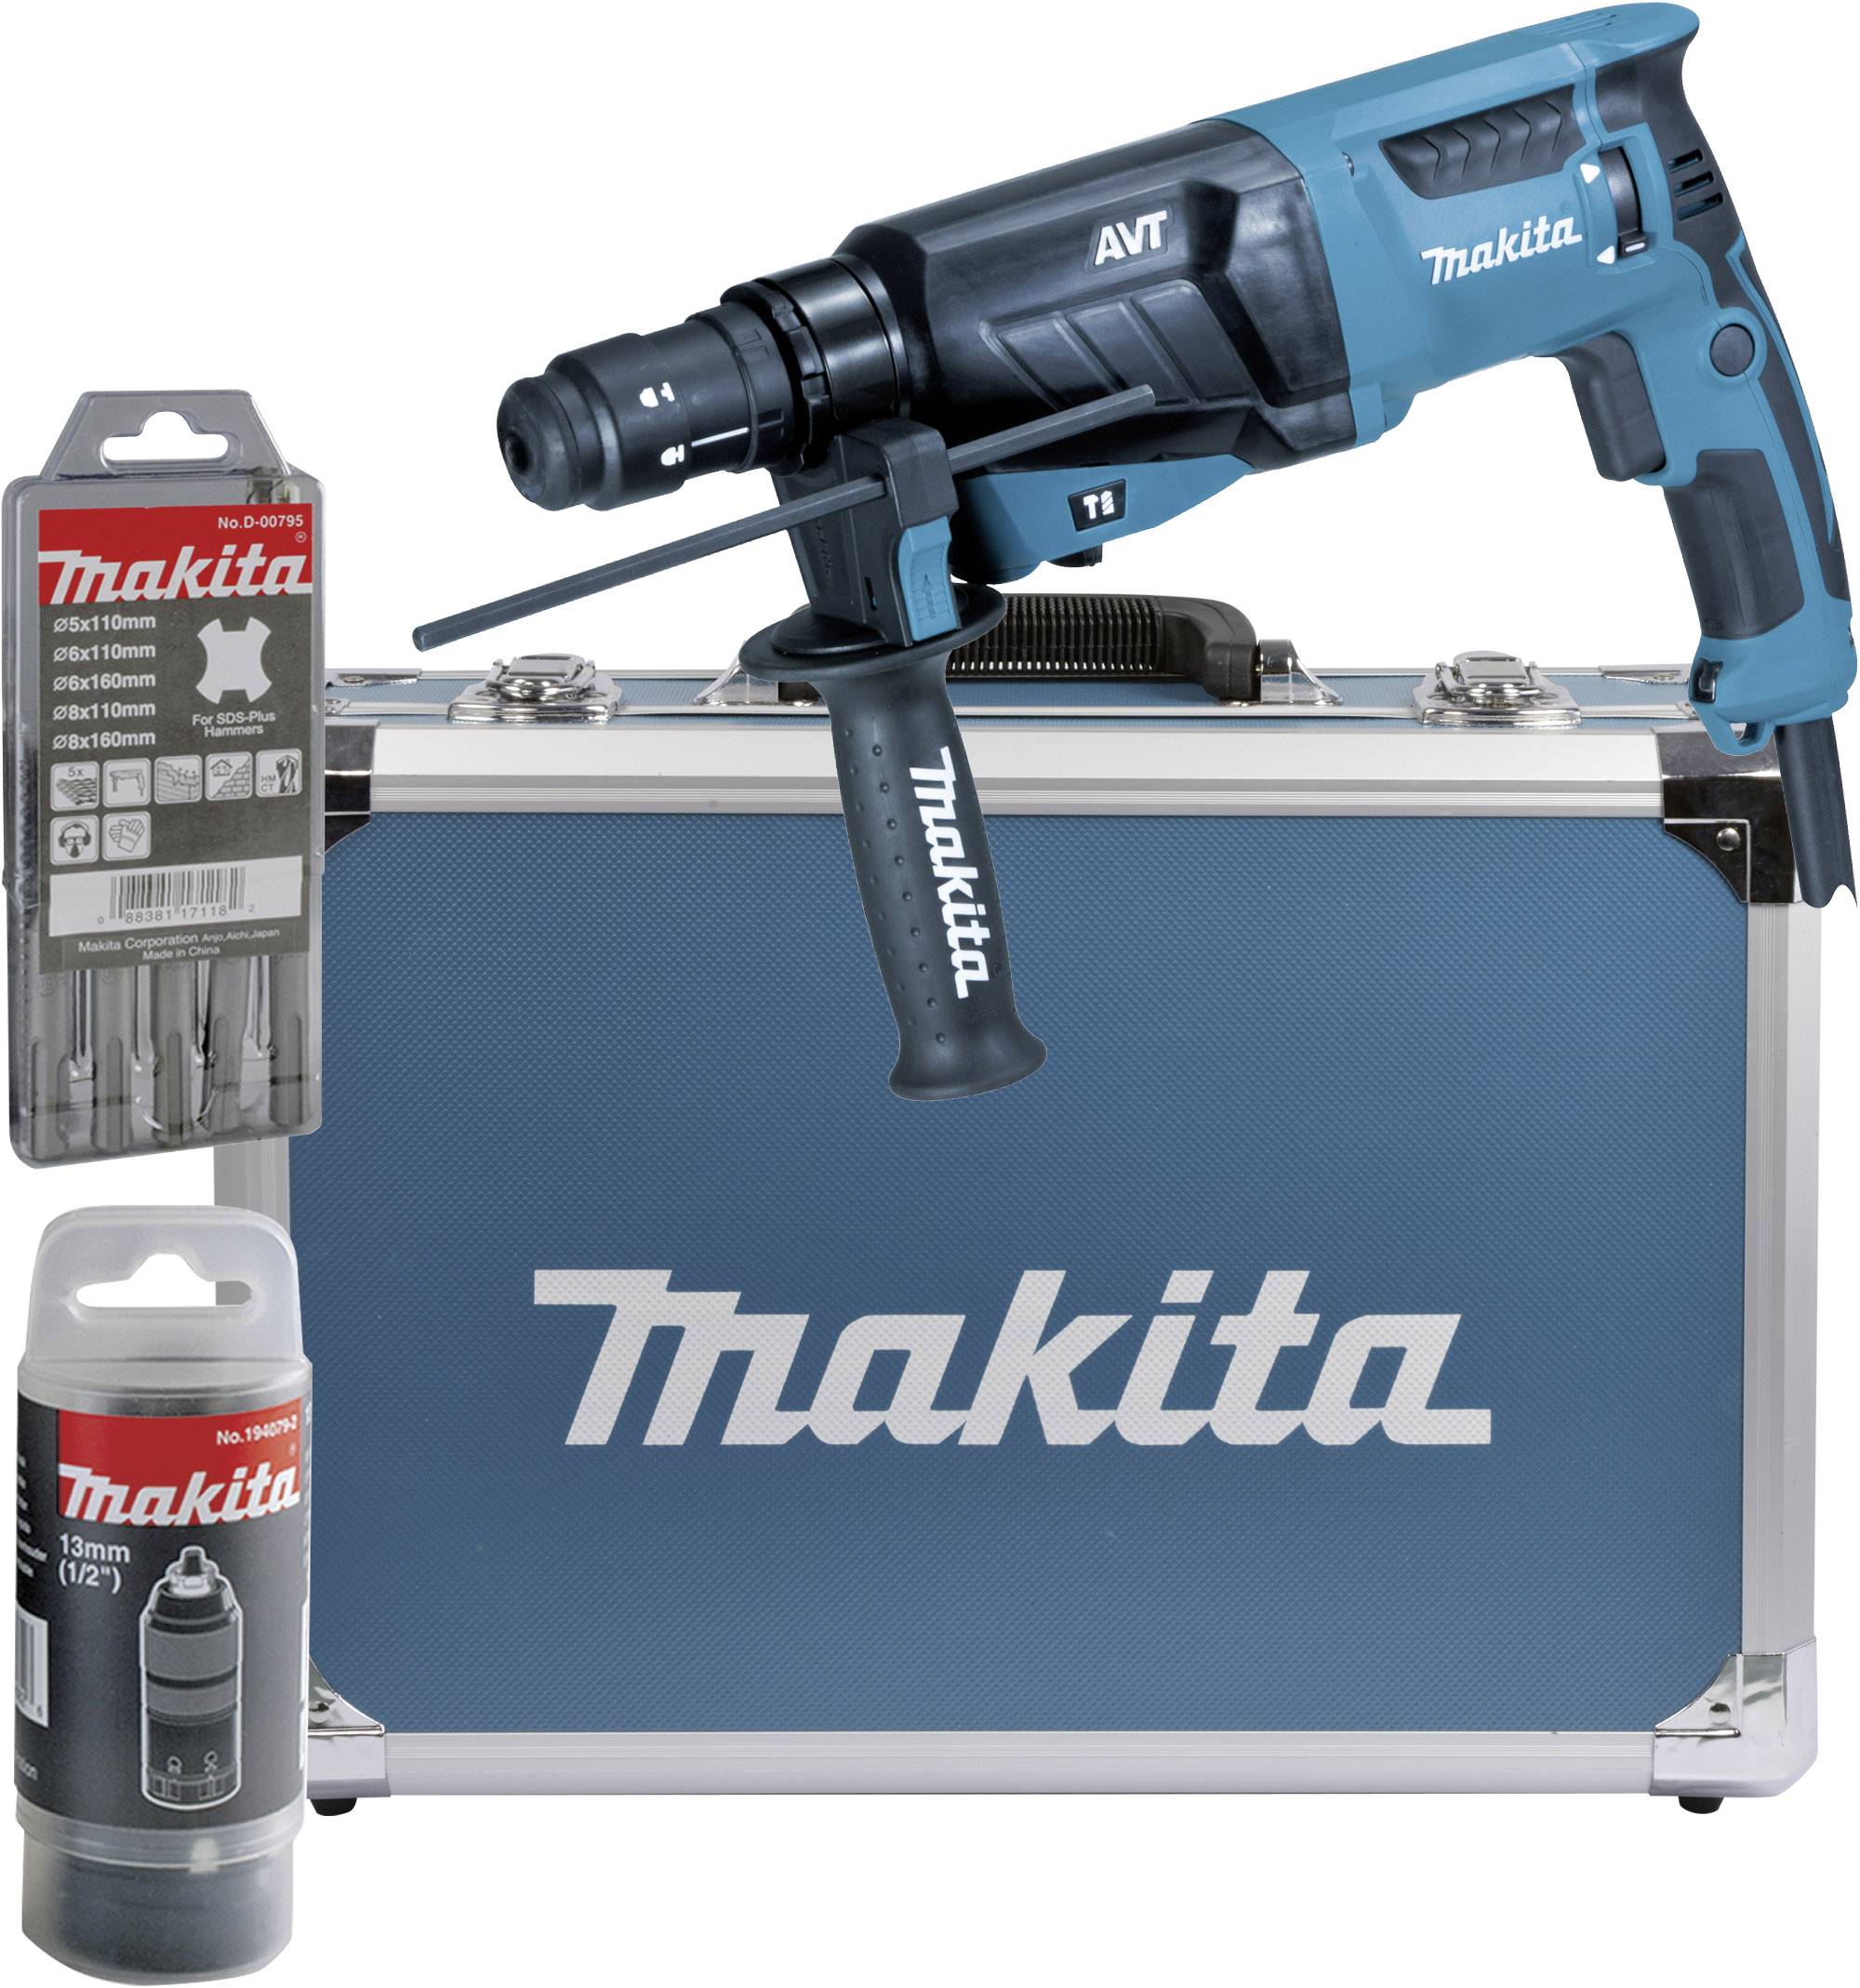 Makita HR2631FT13 SDS-Plus-Hammer drill | Conrad.com